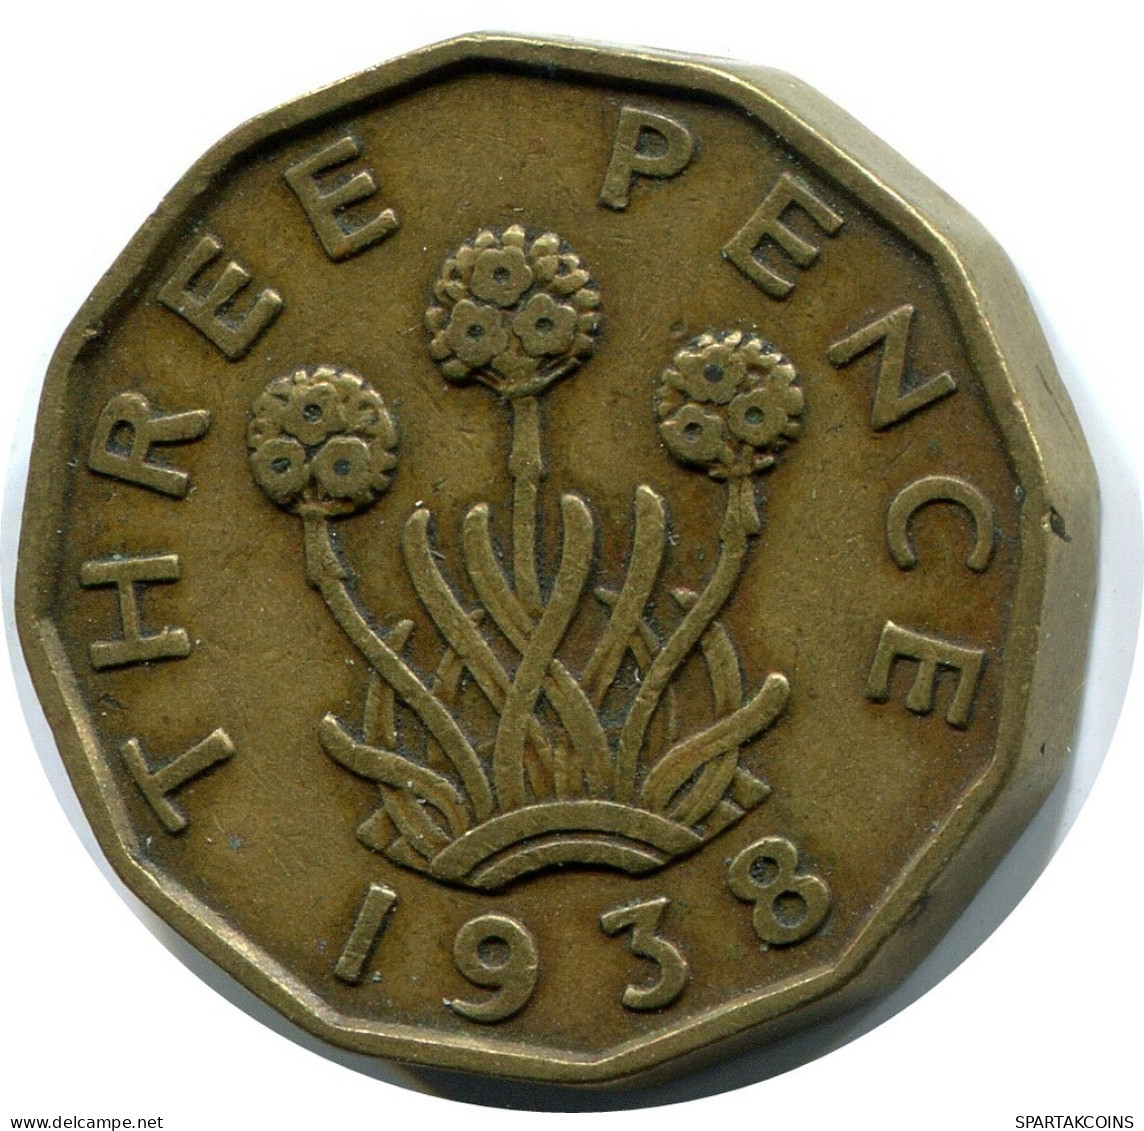 THREEPENCE 1938 UK GRANDE-BRETAGNE GREAT BRITAIN Pièce #BB039.F.A - F. 3 Pence